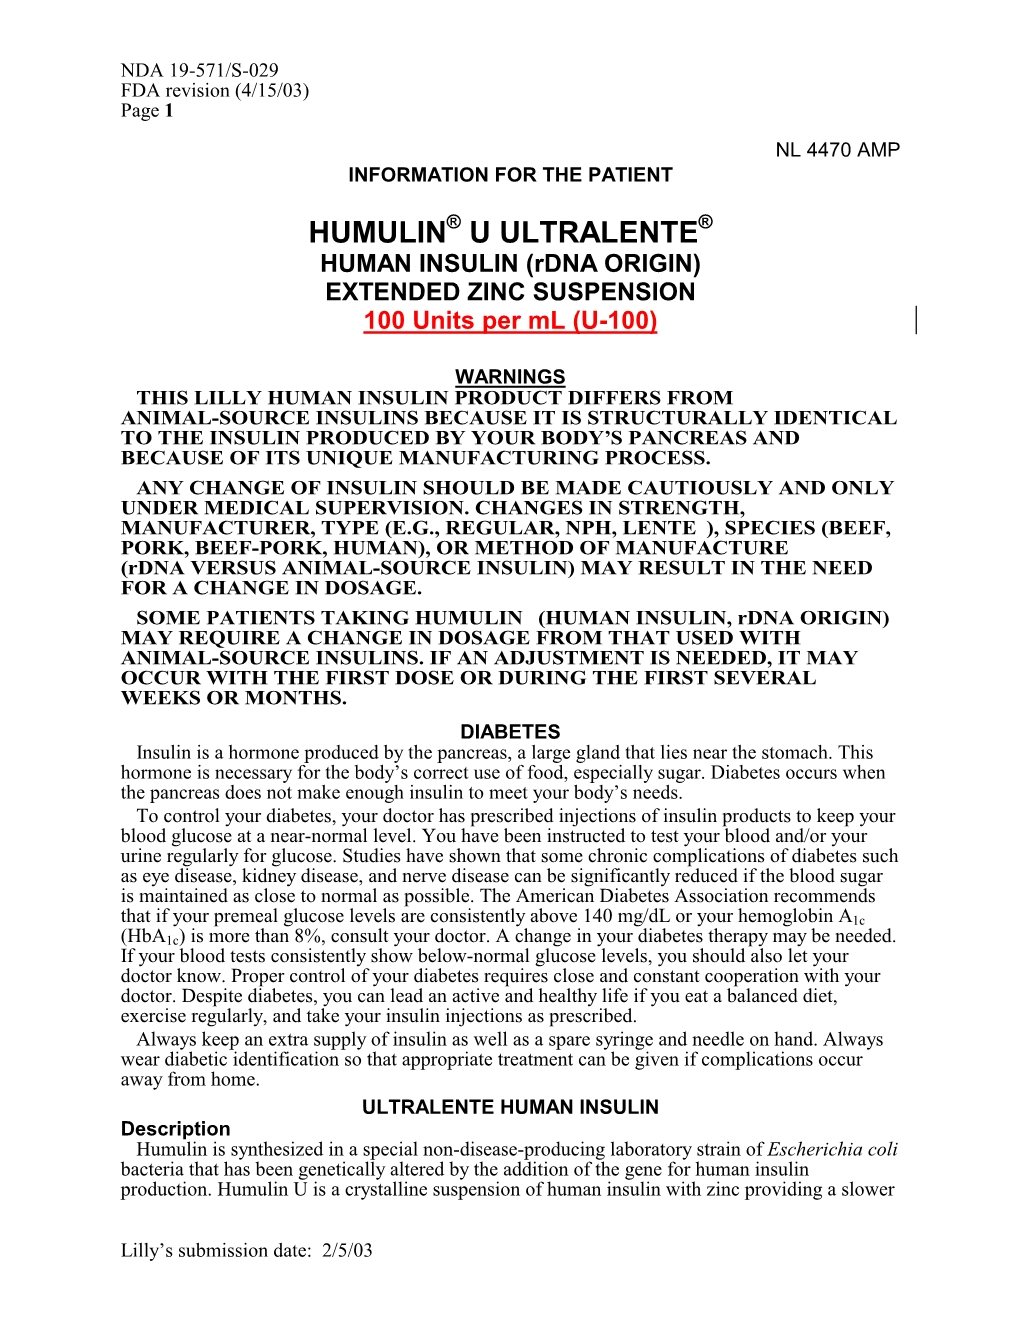 HUMAN INSULIN (Rdna ORIGIN) EXTENDED ZINC SUSPENSION 100 Units Per Ml (U-100)